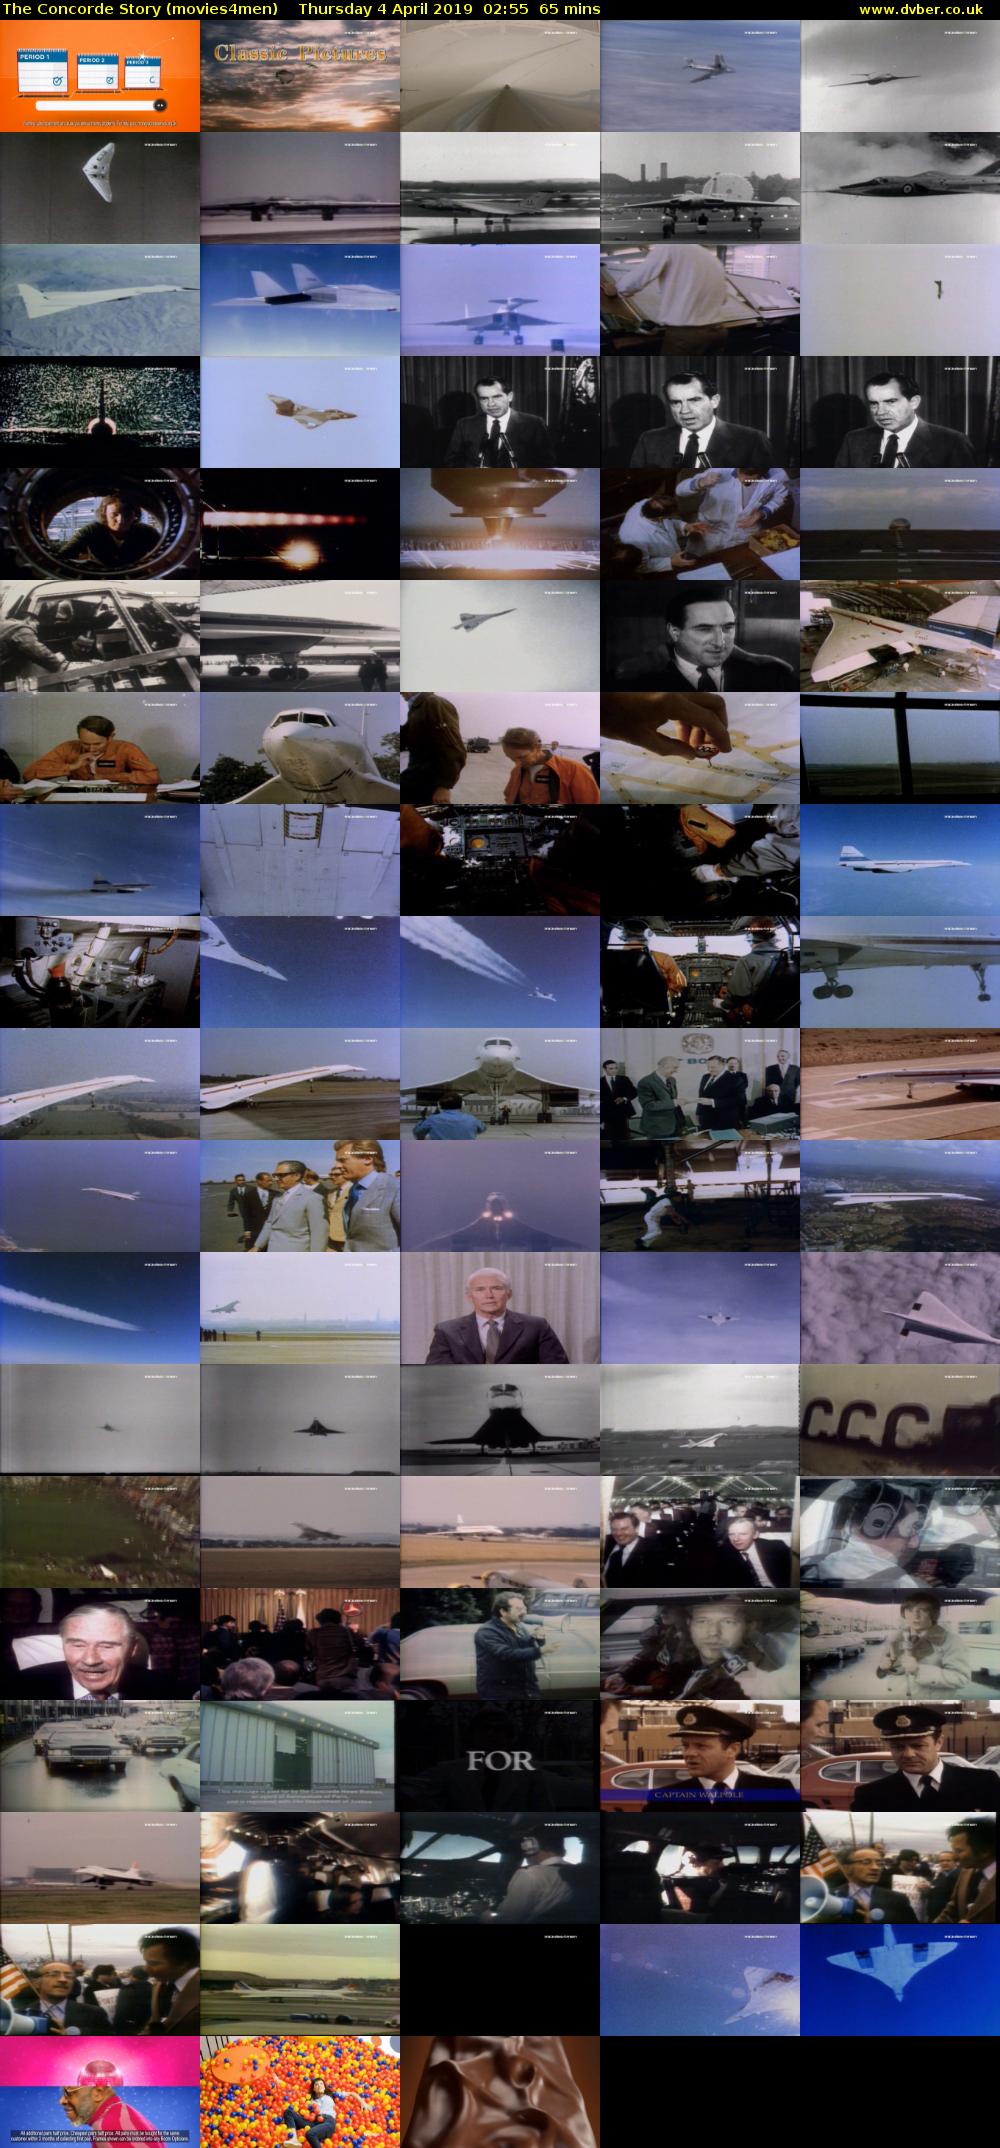 The Concorde Story (movies4men) Thursday 4 April 2019 02:55 - 04:00